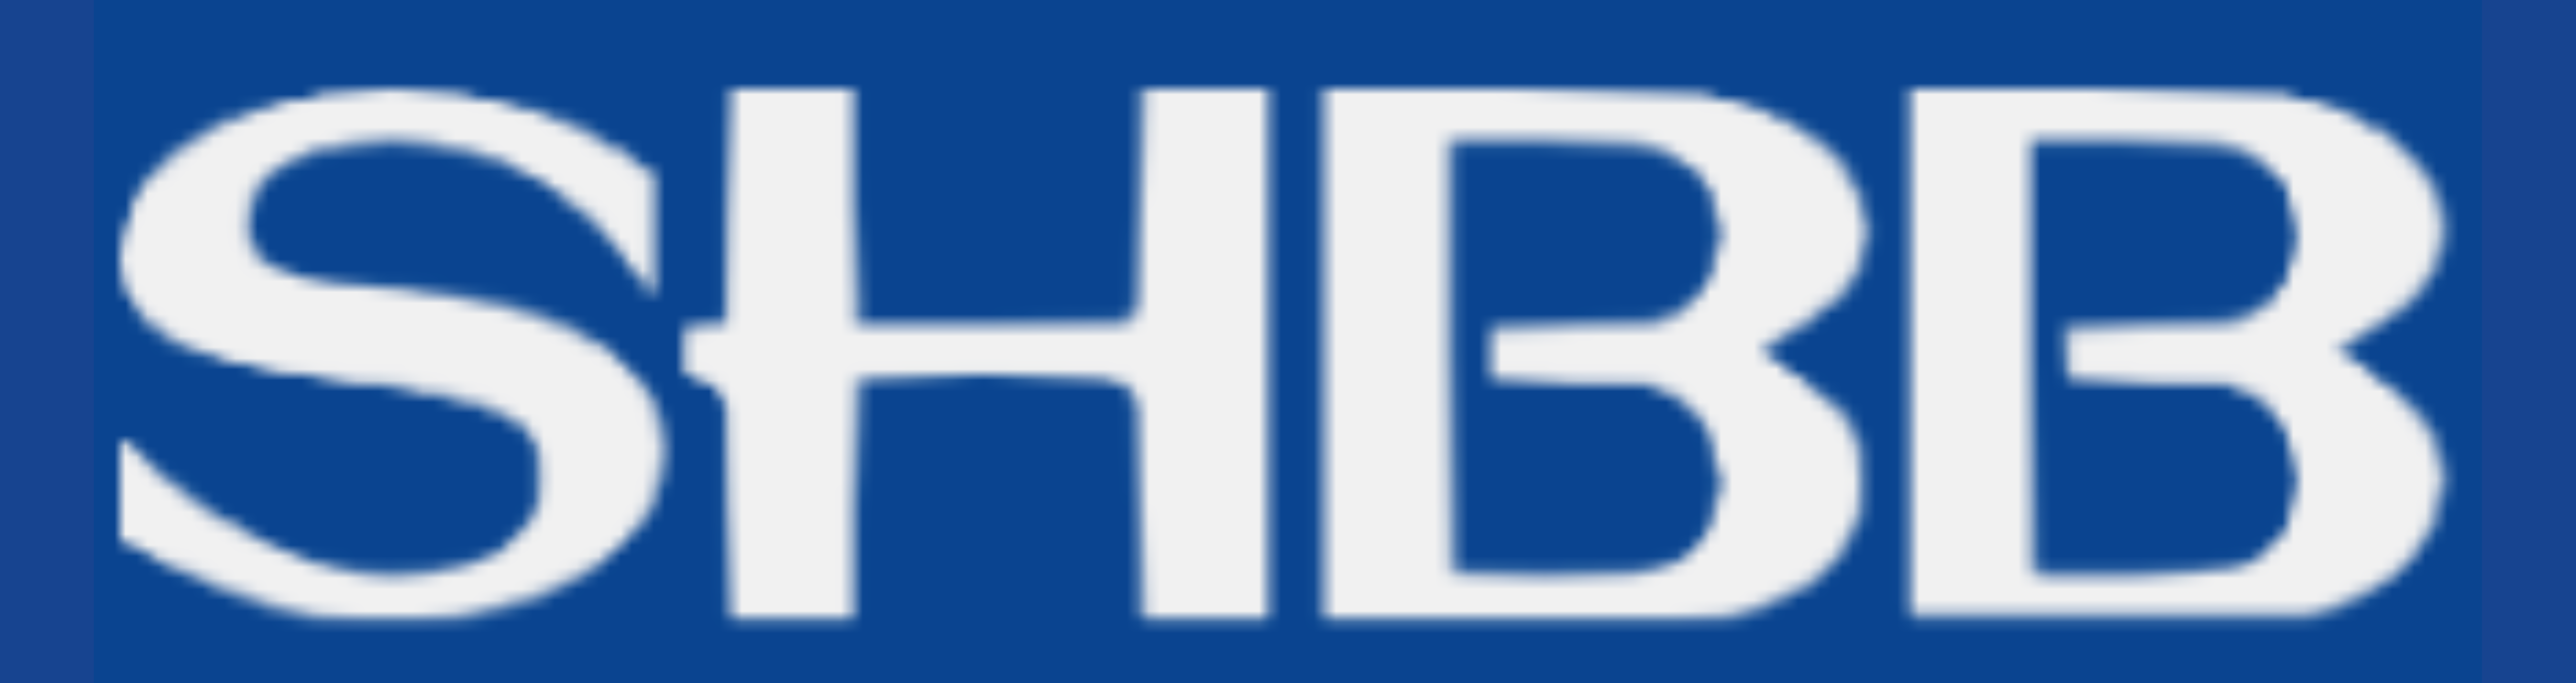 Betriebs- und Steuerberatungsgesellschaft SHBB mbH logo